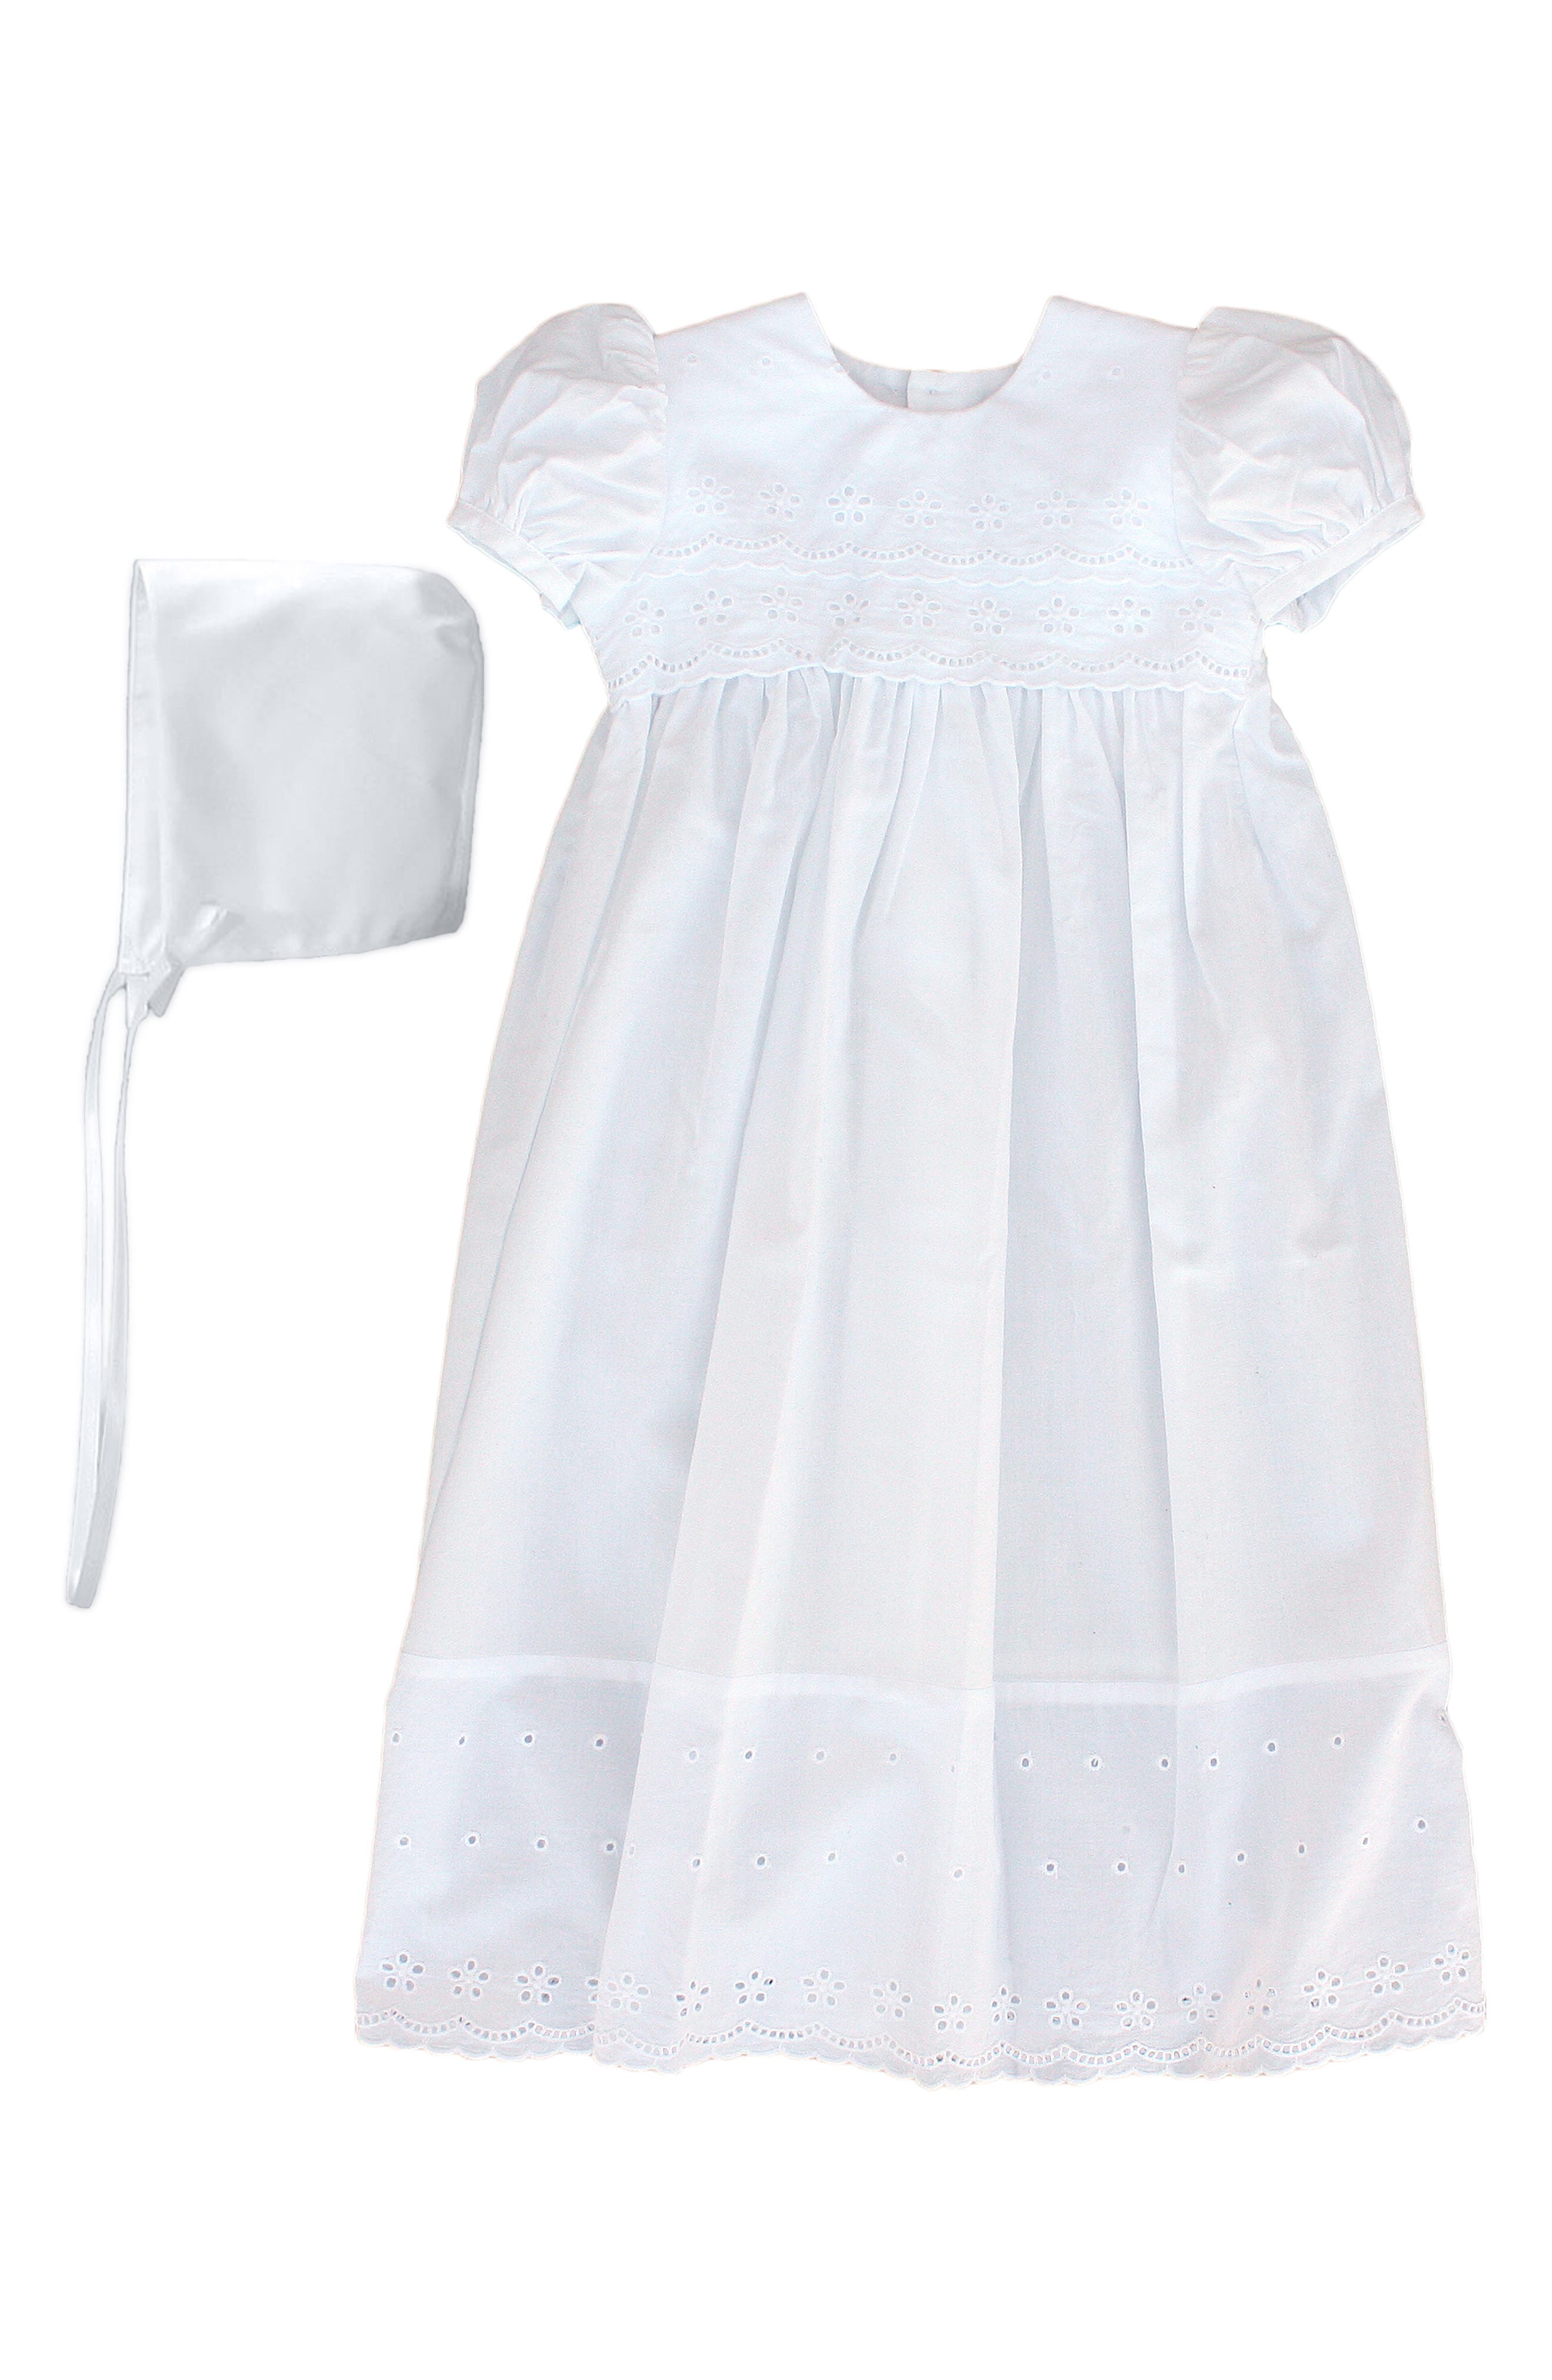 dior christening gowns